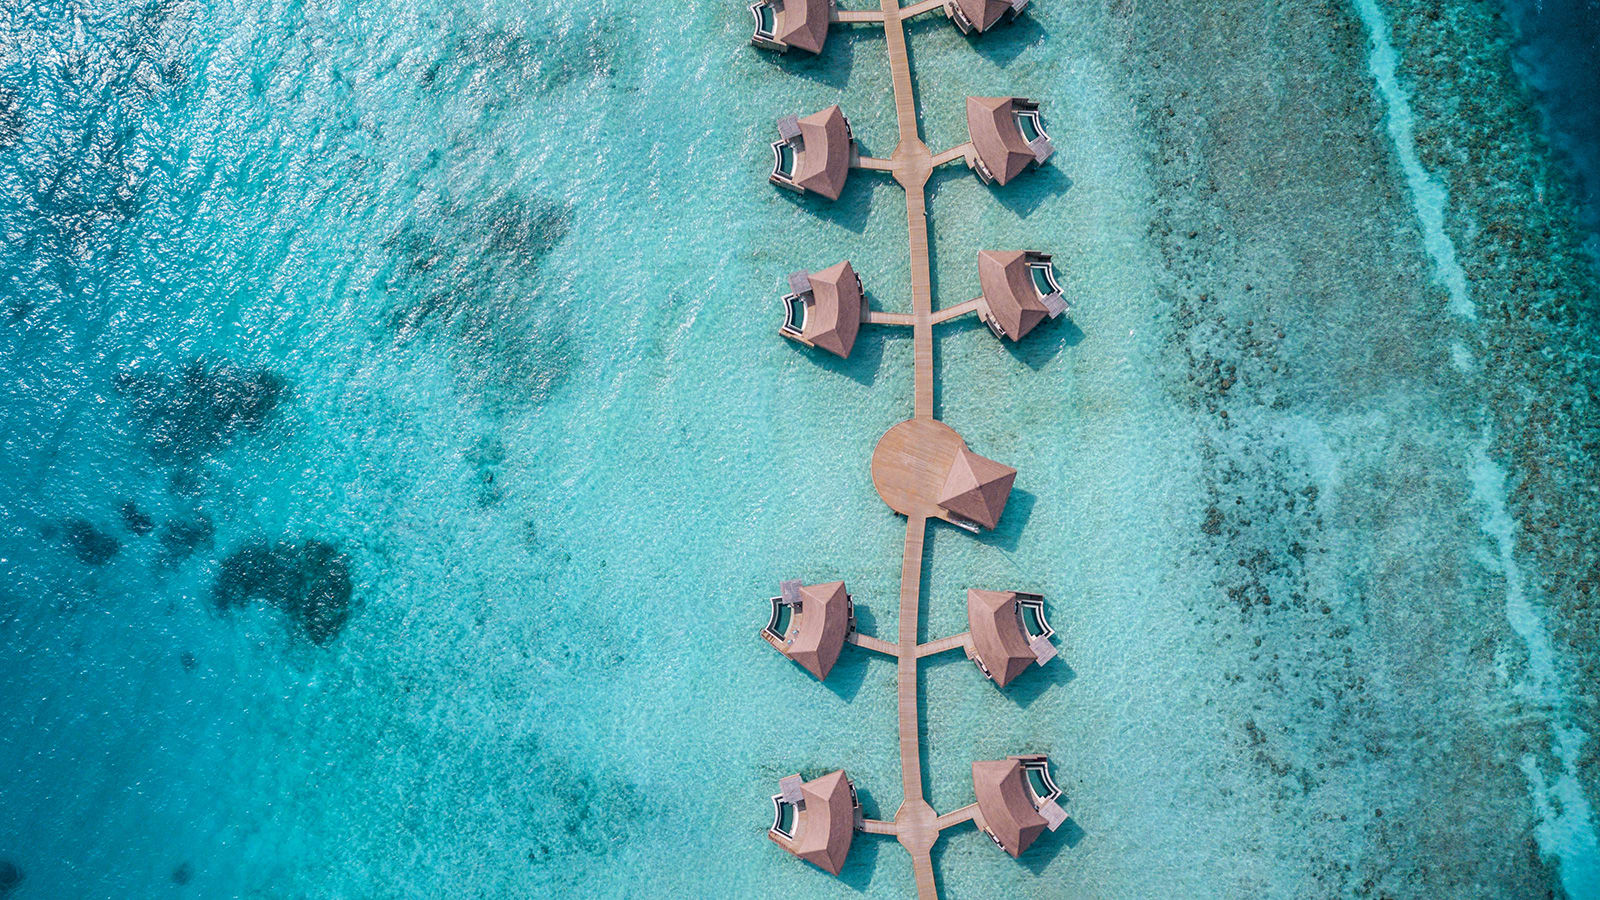 Floating villas in the Maldives